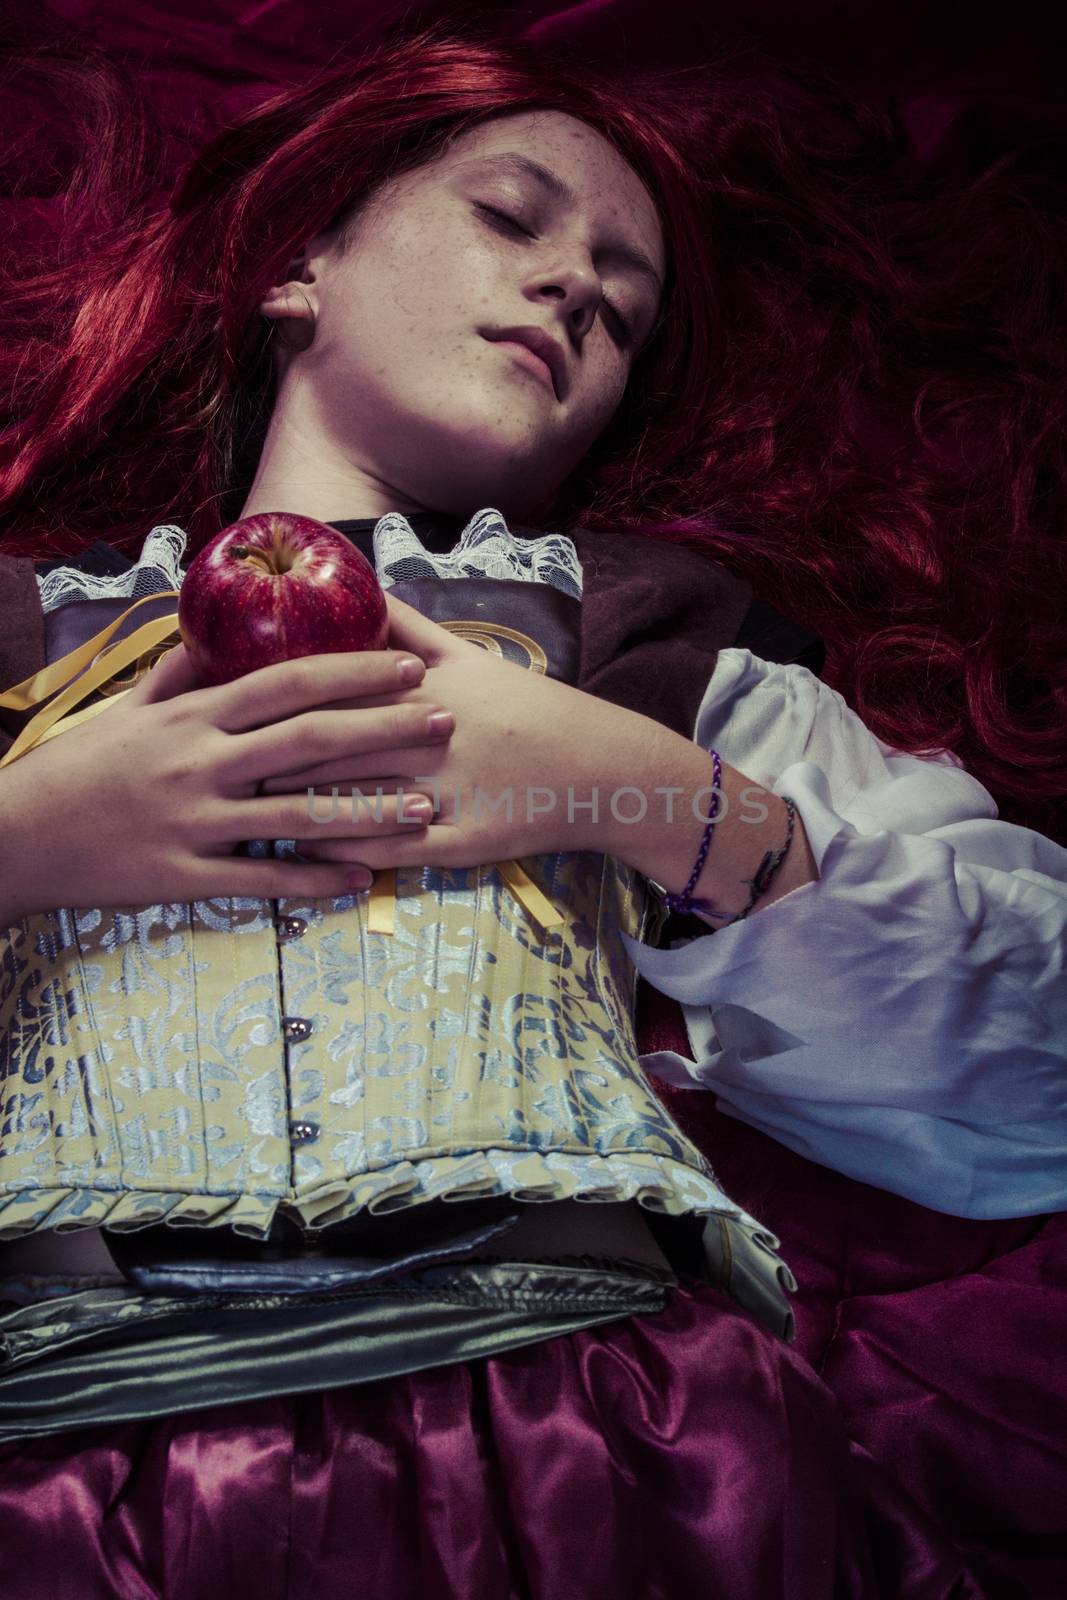 Fairytale, Teen with a red apple lying, tale scene